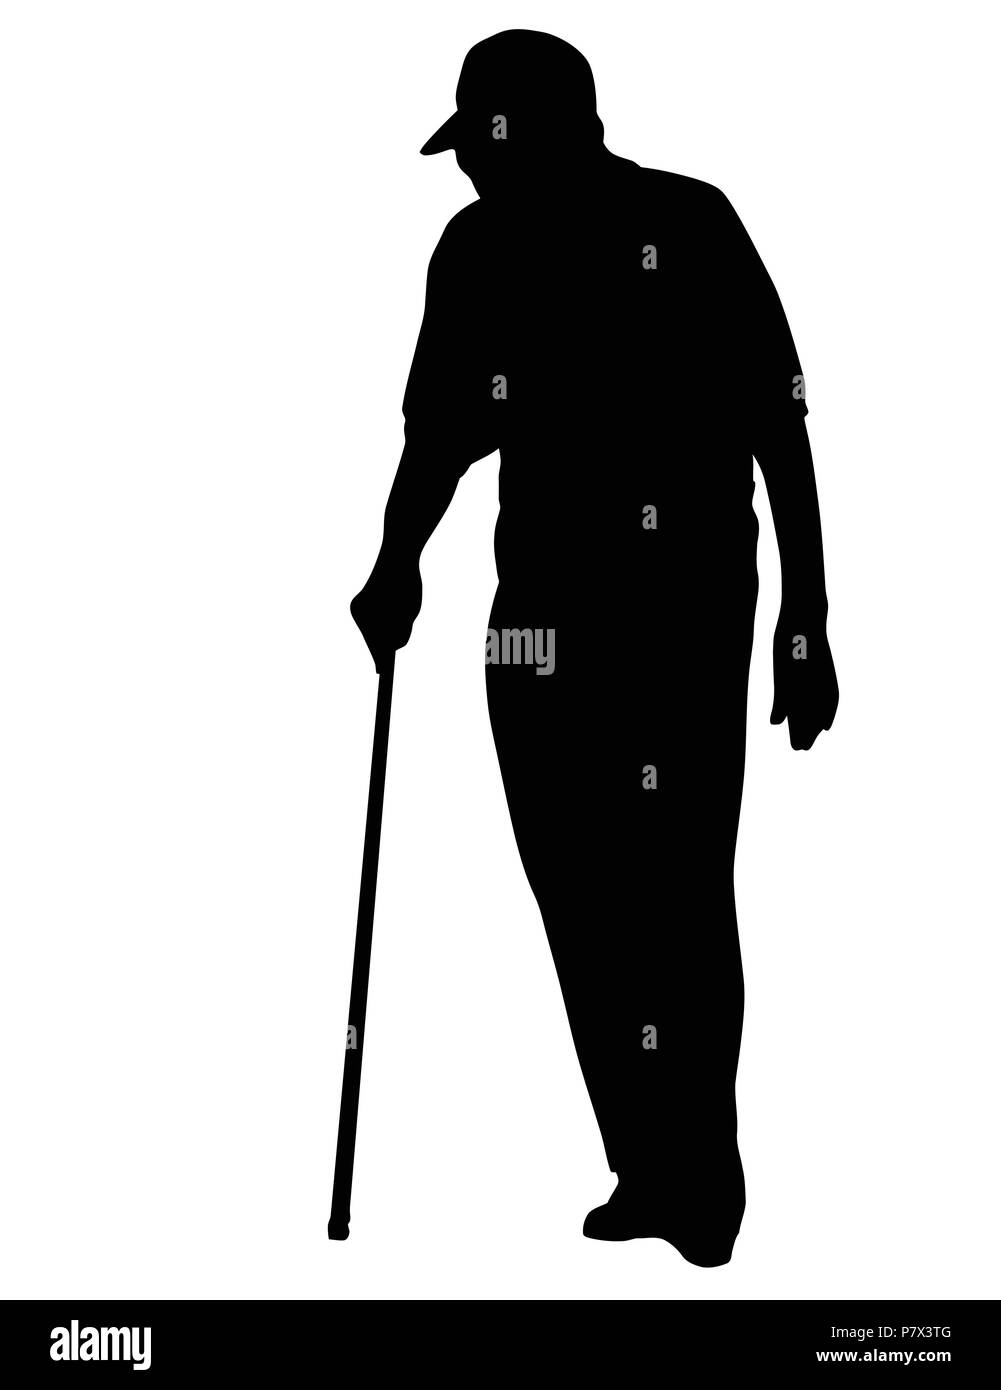 Old man silhouette on white background, vector illustration Stock Vector